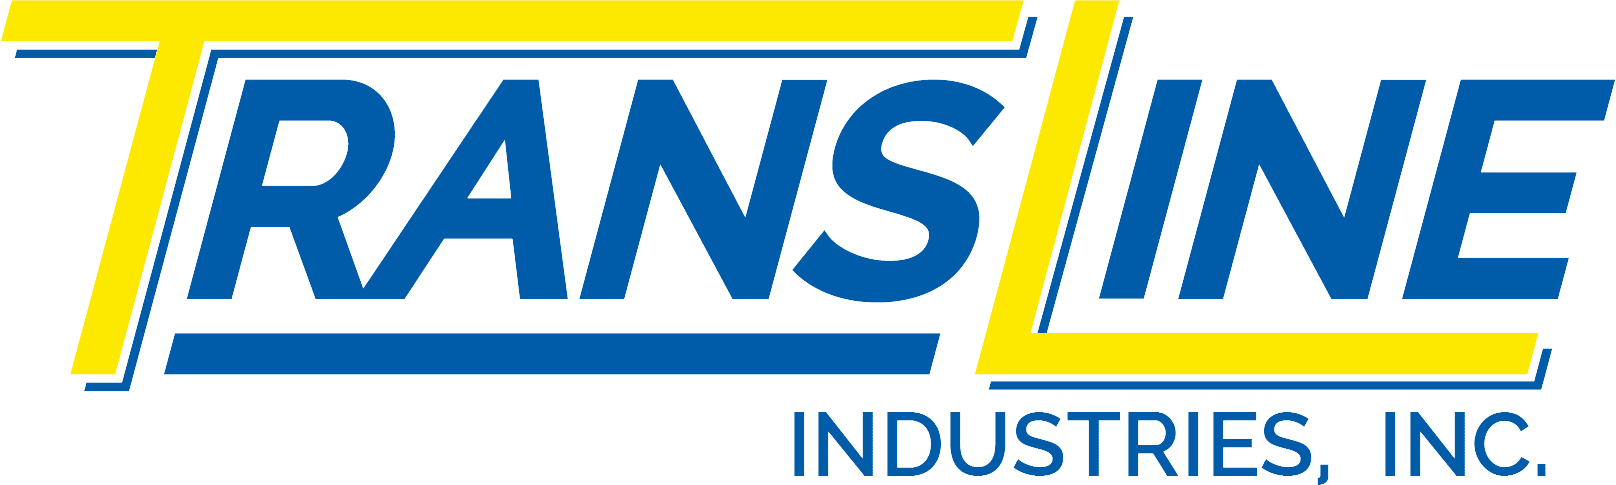 Transline Industries, Inc.